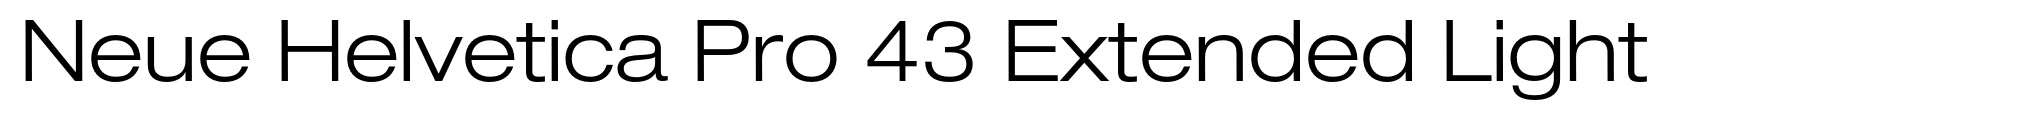 Neue Helvetica Pro 43 Extended Light image